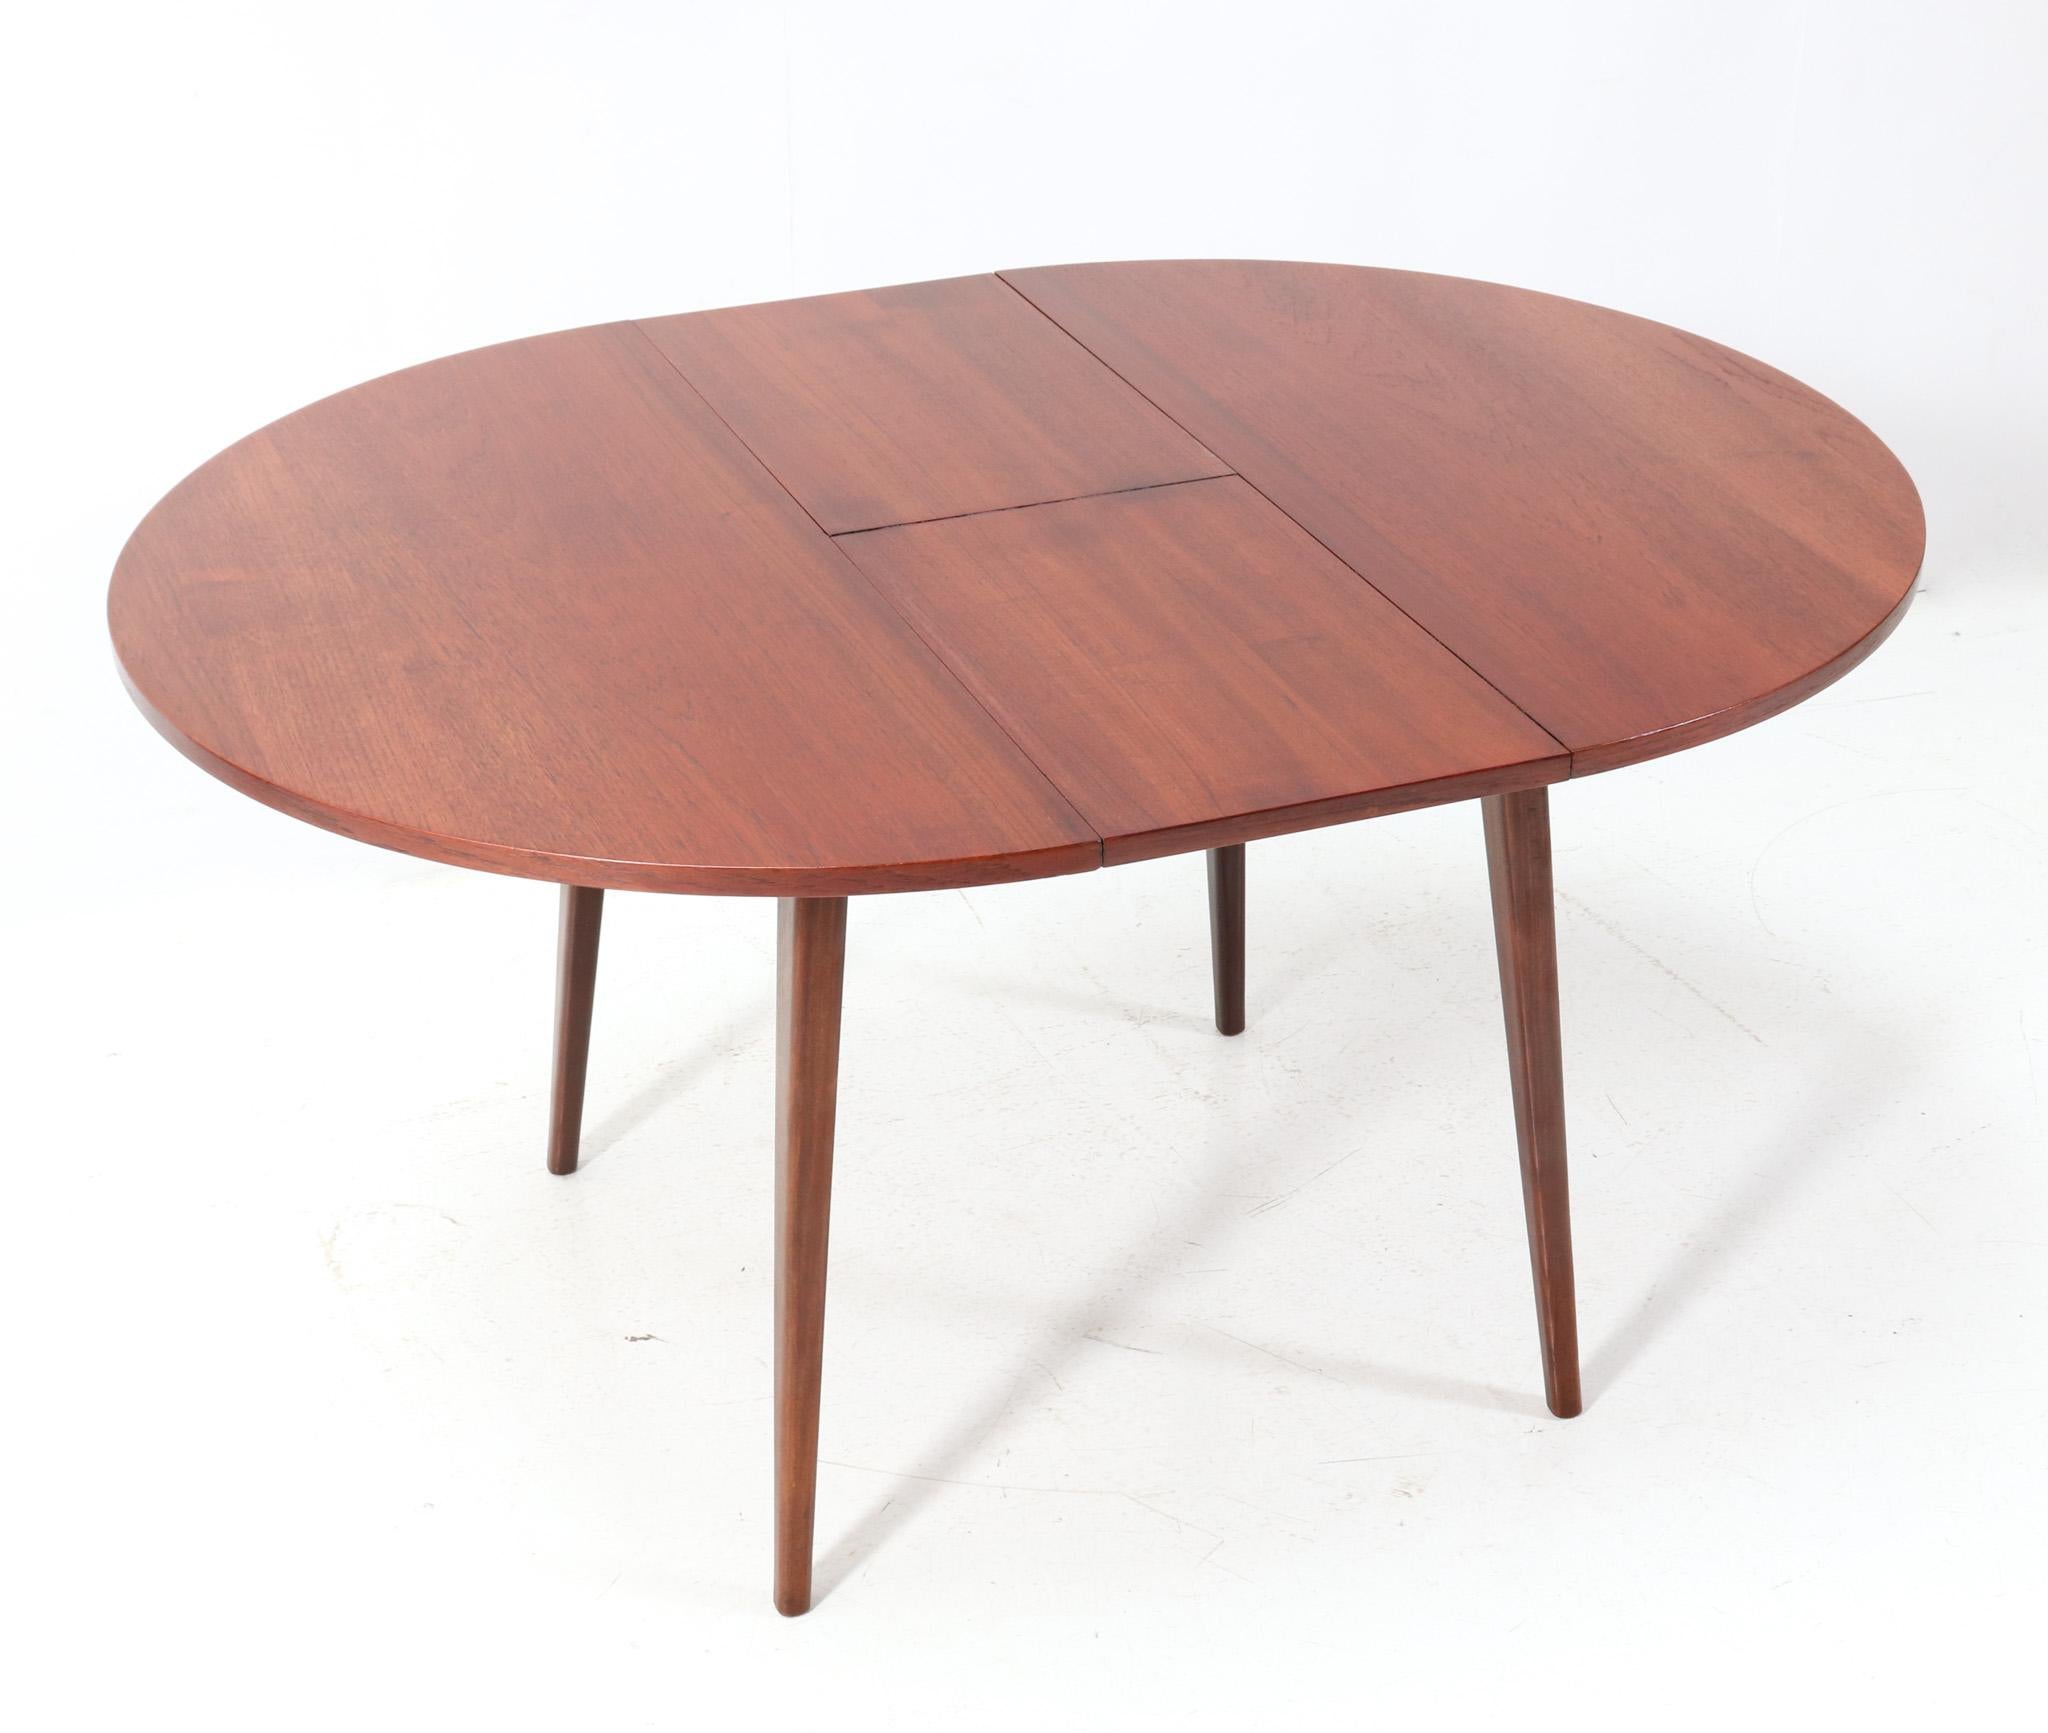 Teak Mid-Century Modern Extendable Dining Table by Louis van Teeffelen, 1950s For Sale 1